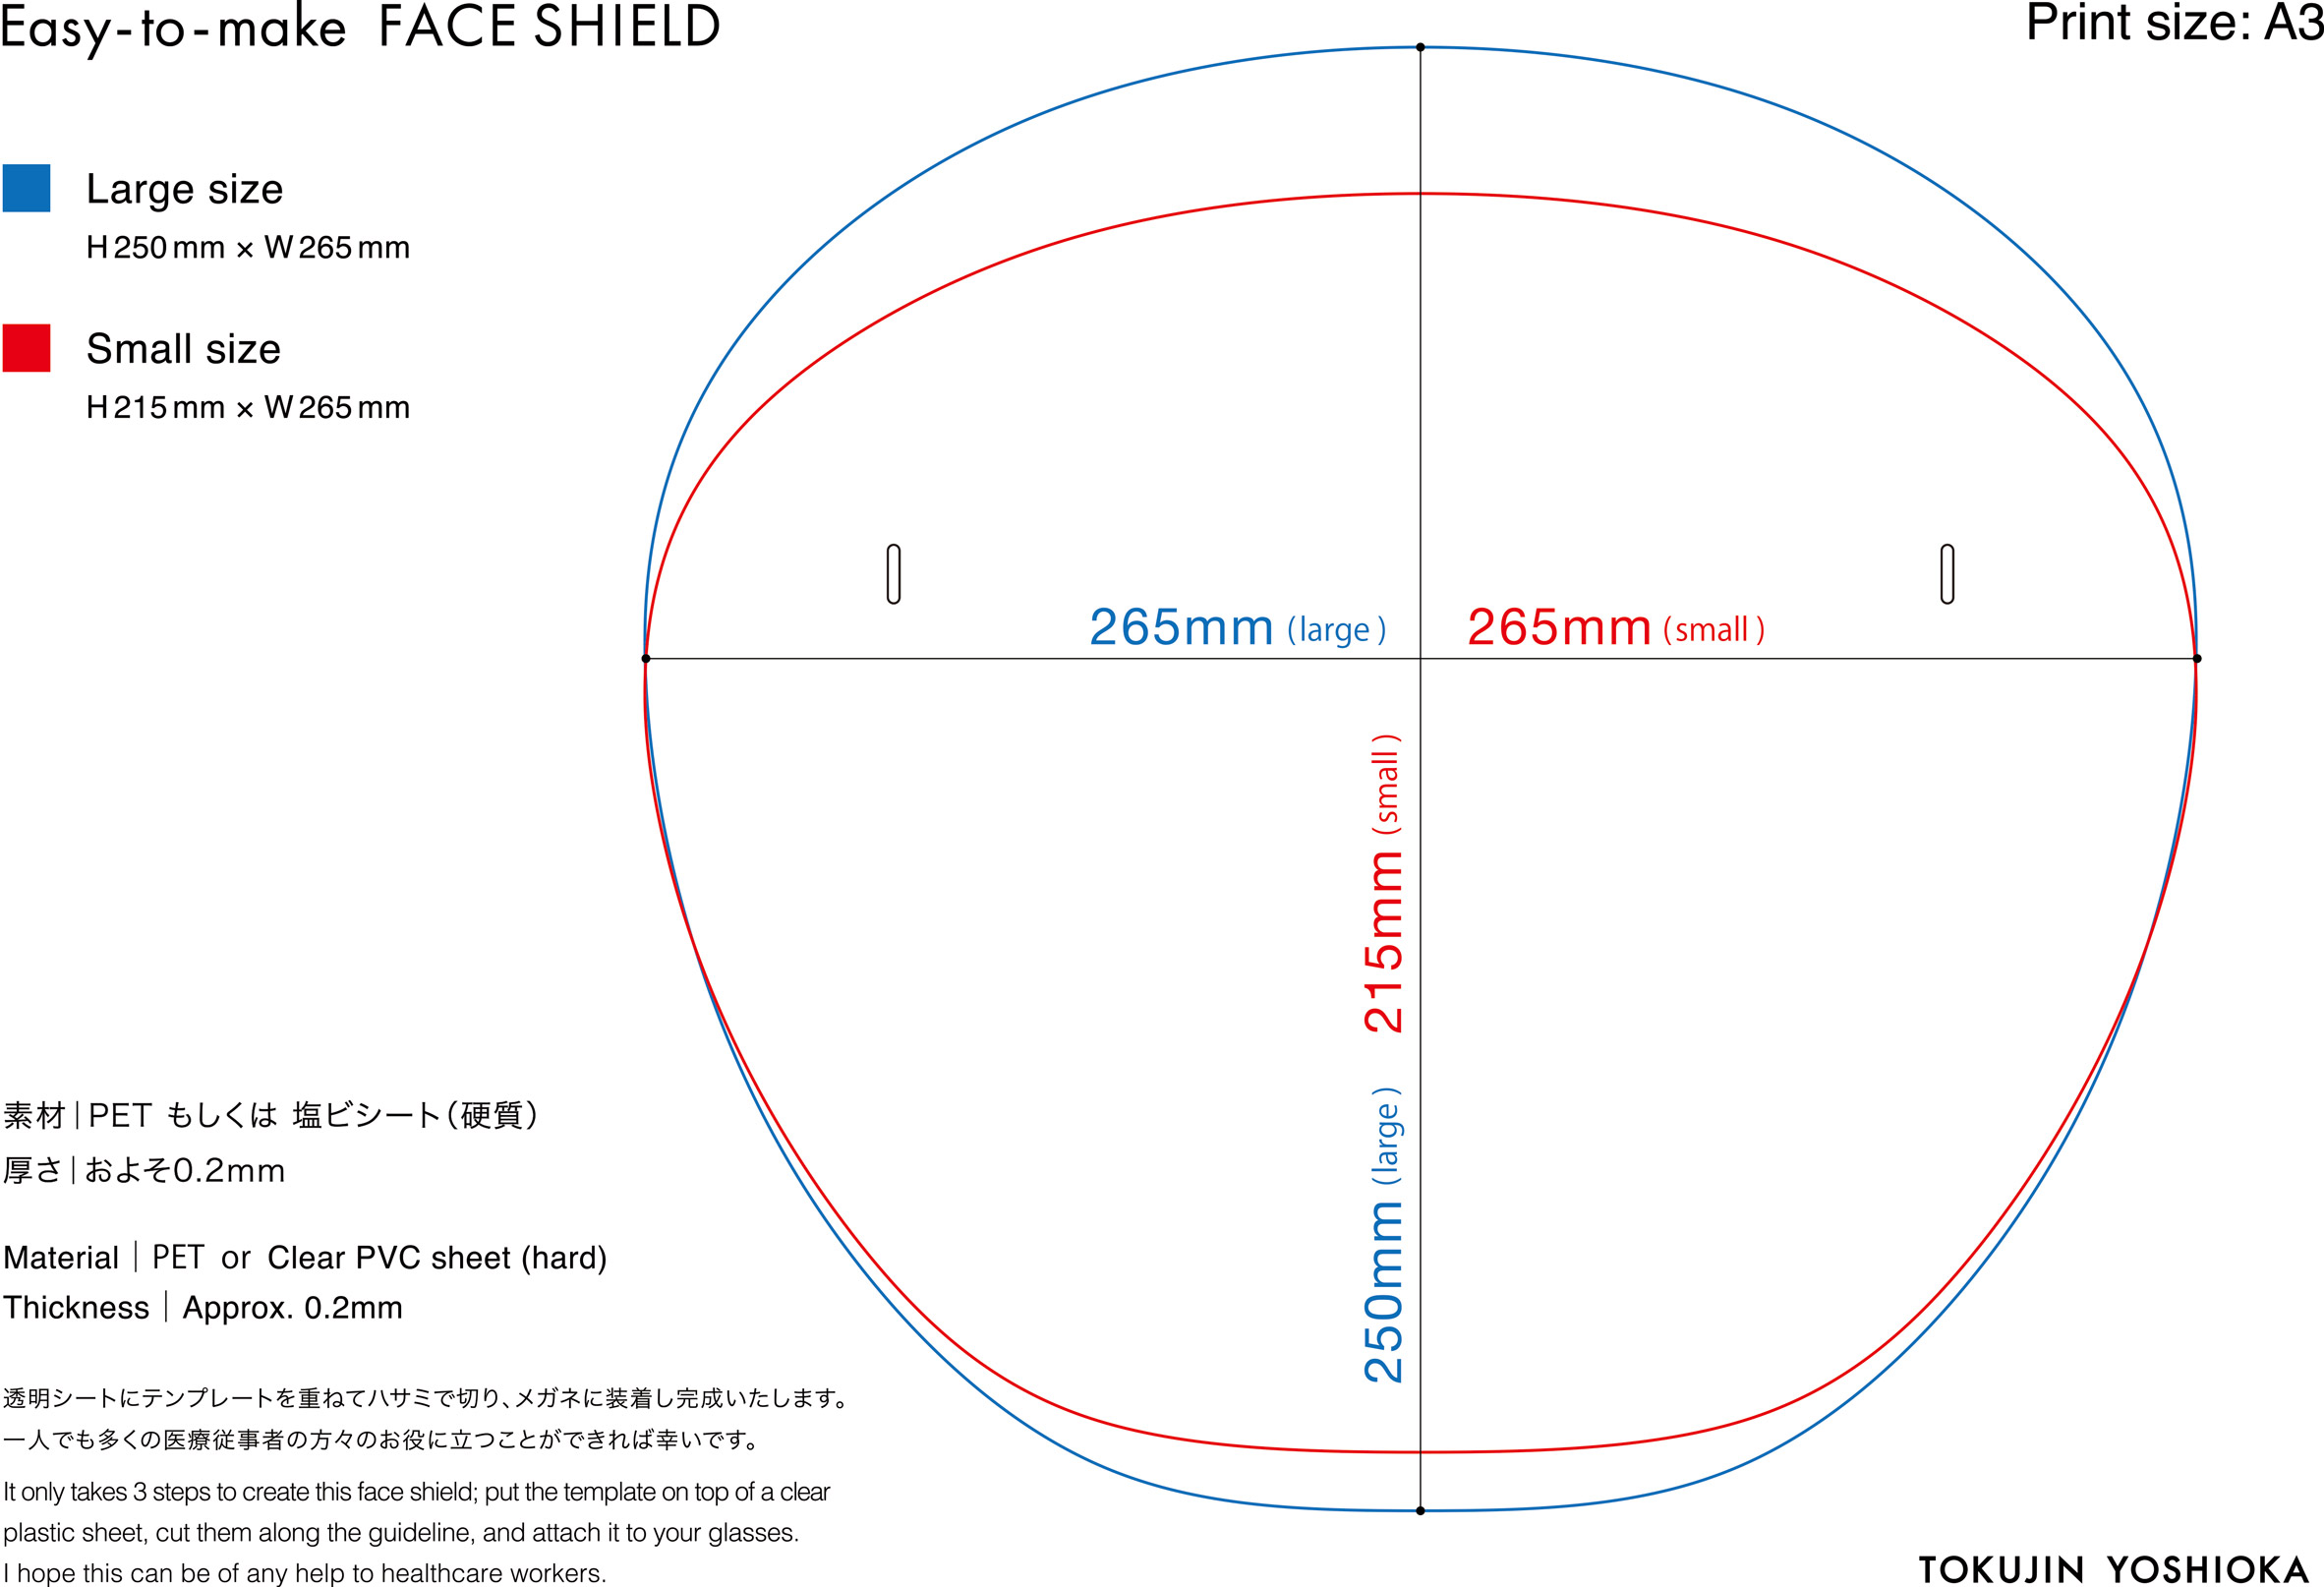 Tokujin Yoshioka shares three-step template for emergency face shields